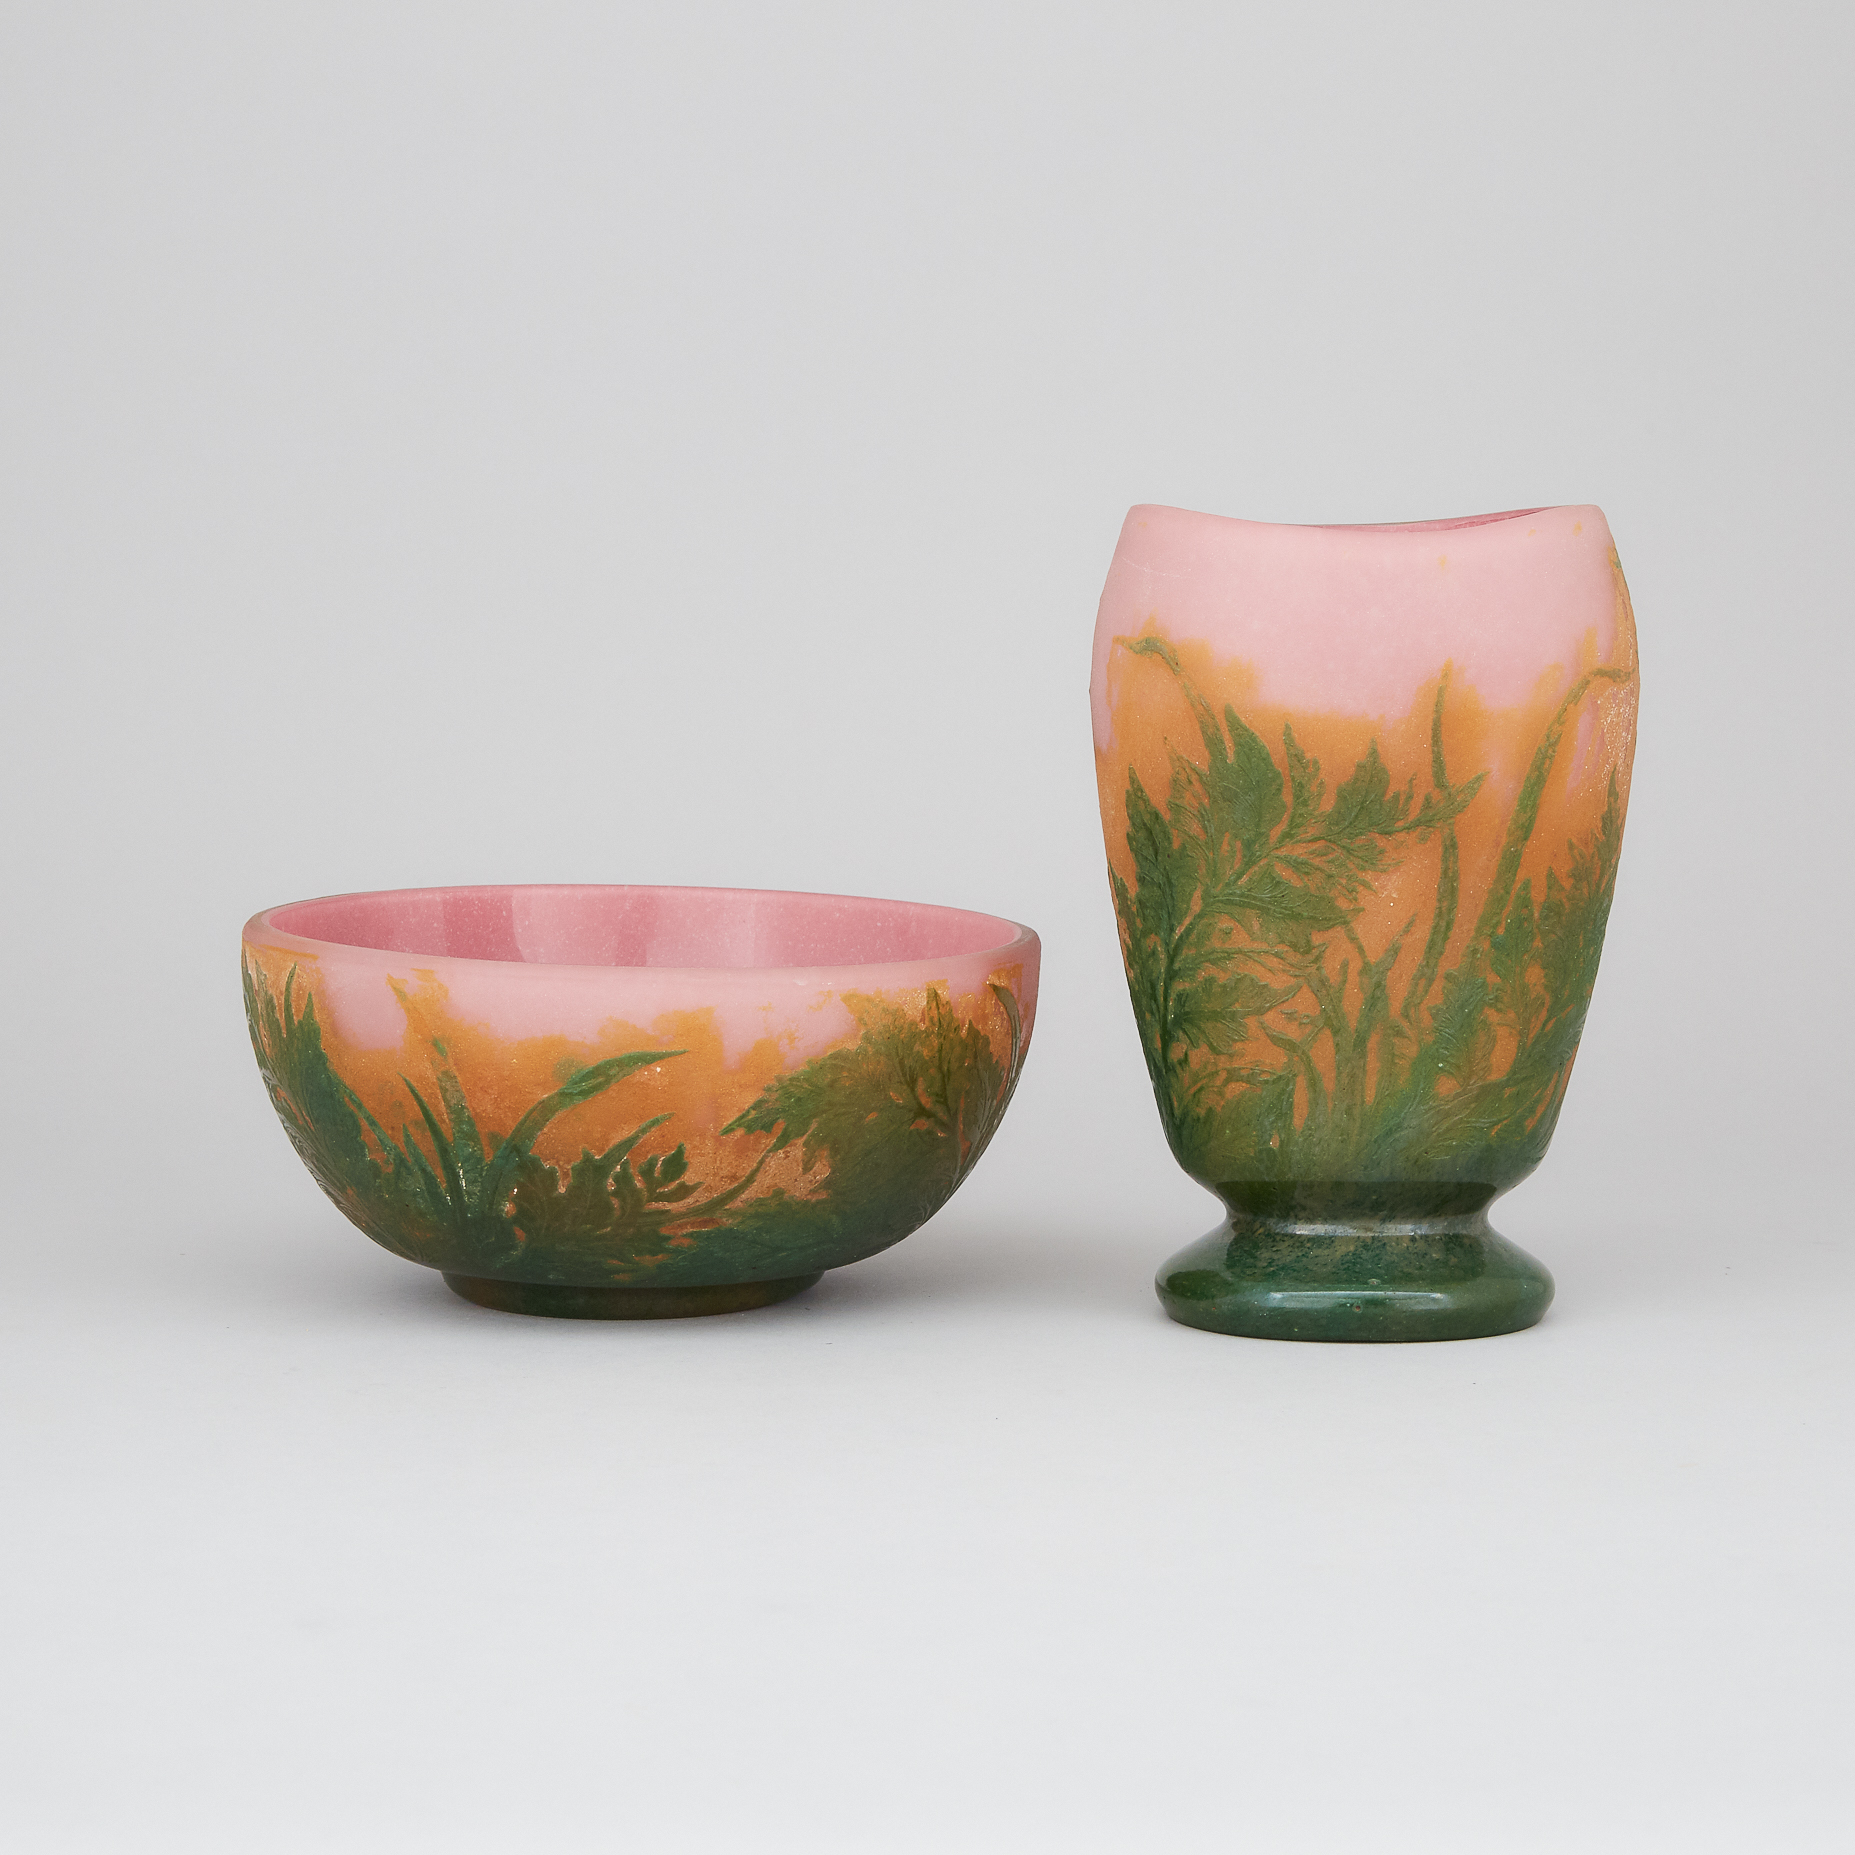 Romanian Daum Style Cameo Glass Vase and Bowl, 20th century